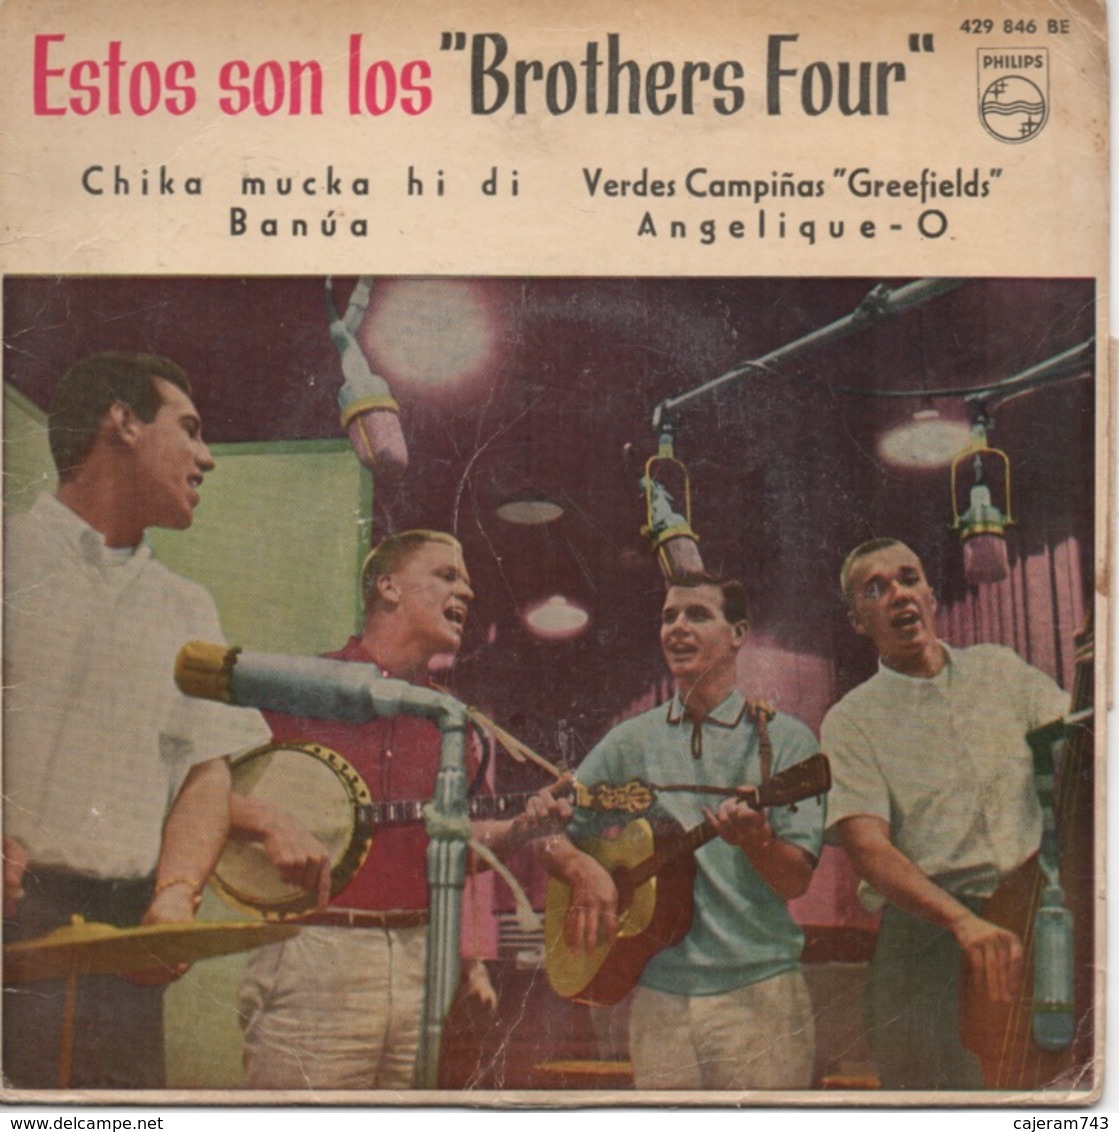 45T. Estos Son Los "Brothers Four" Chika Mucka Hi Di - Banua - Verdes Campinas "Greefield" - Angelique. Pressage ESPAGNE - Other - Spanish Music